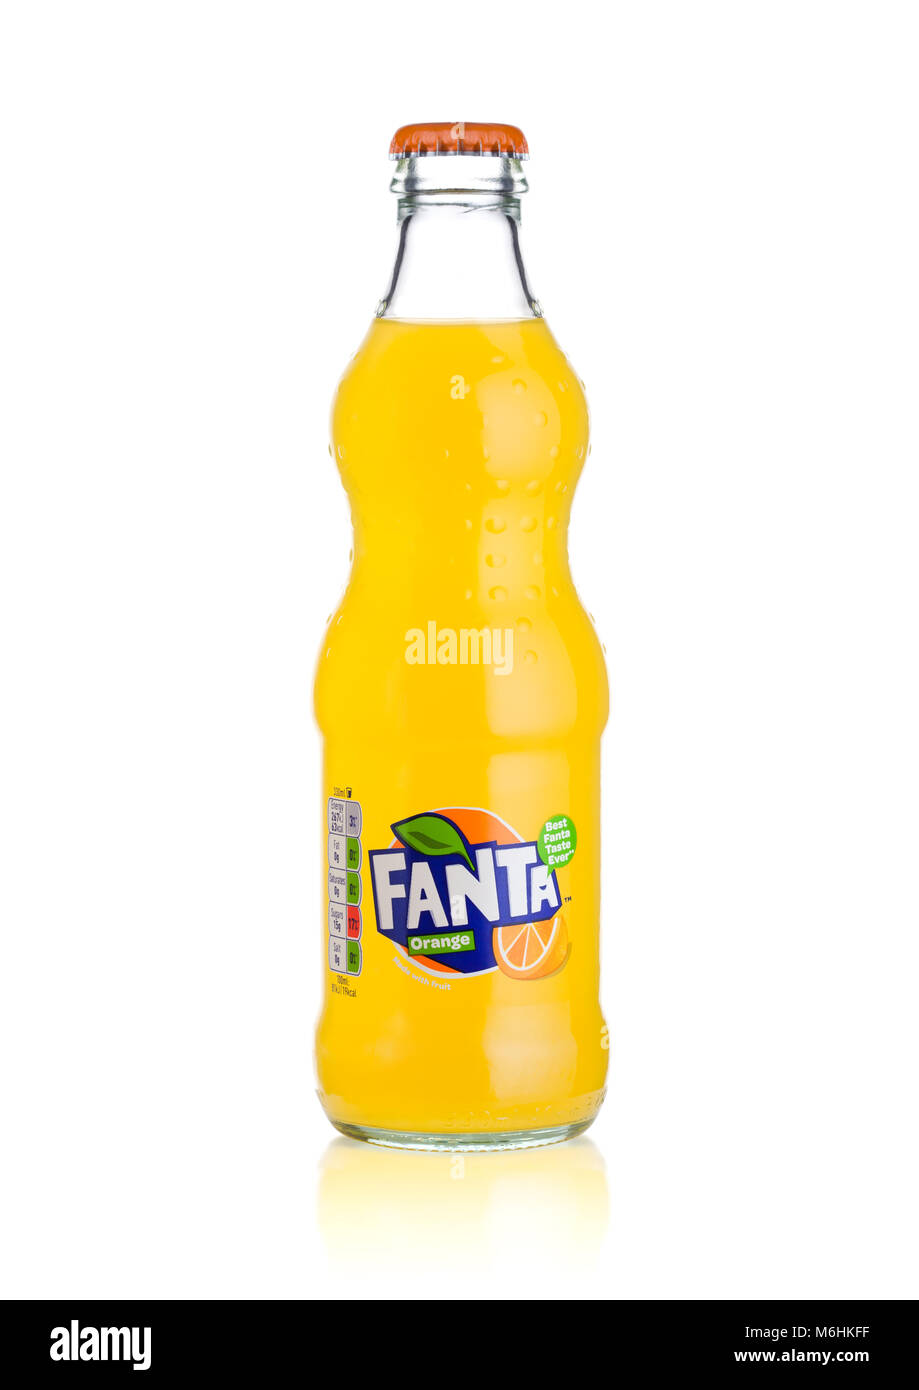 LONDON, UK - MARCH 01, 2018: Glass bottle of Fanta orange soft drink on white background. Stock Photo